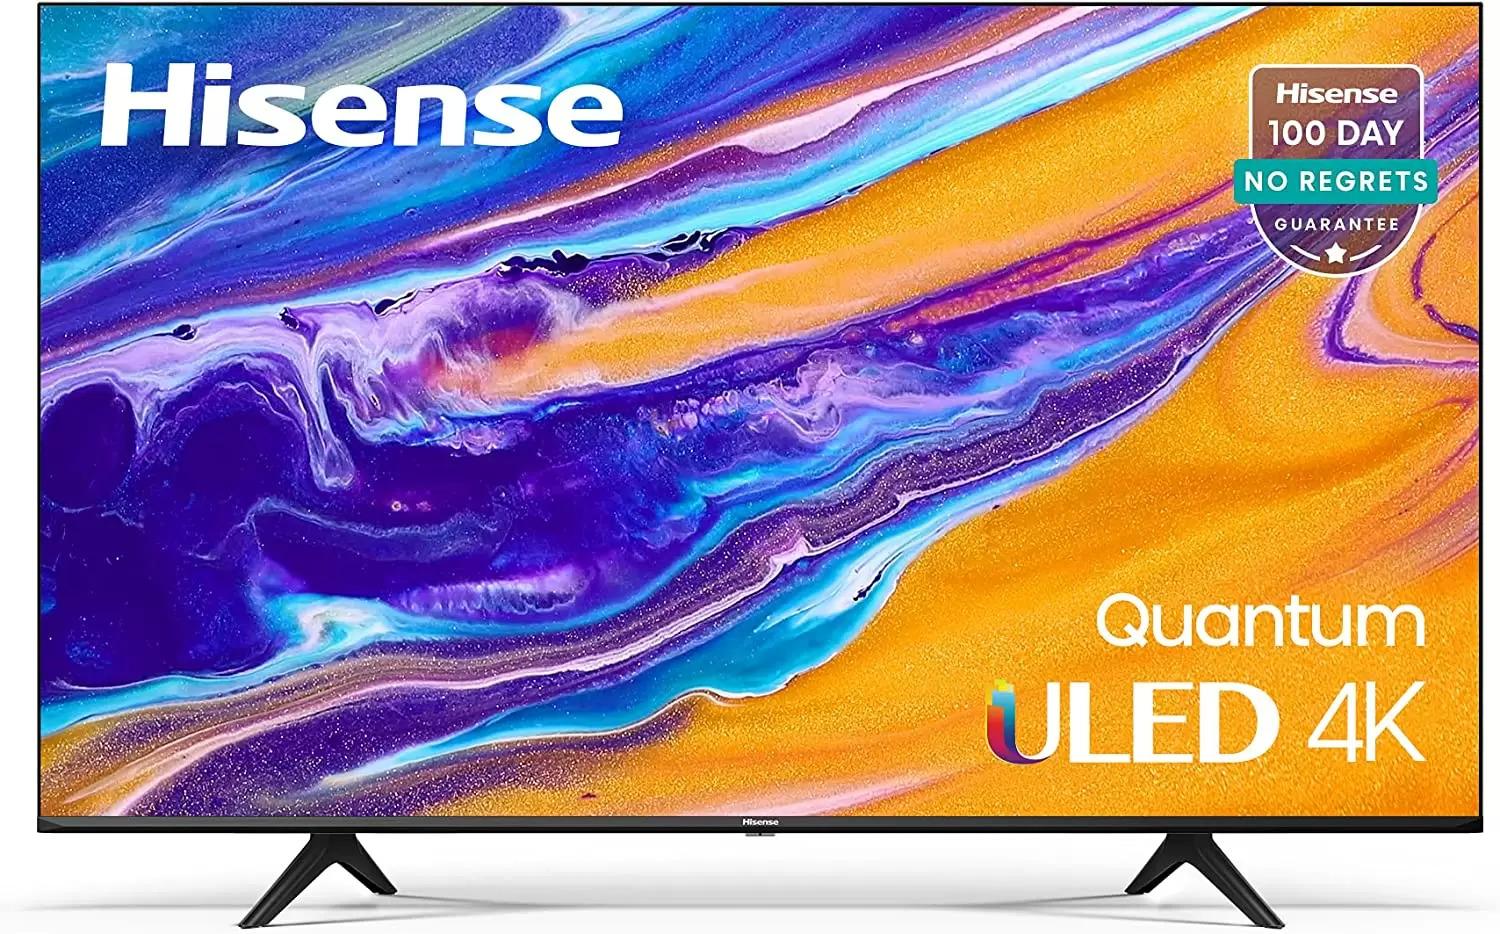 50in Hisense U6G 4K ULED Quantum HDR Smart TV + $100 GC for $399 Shipped